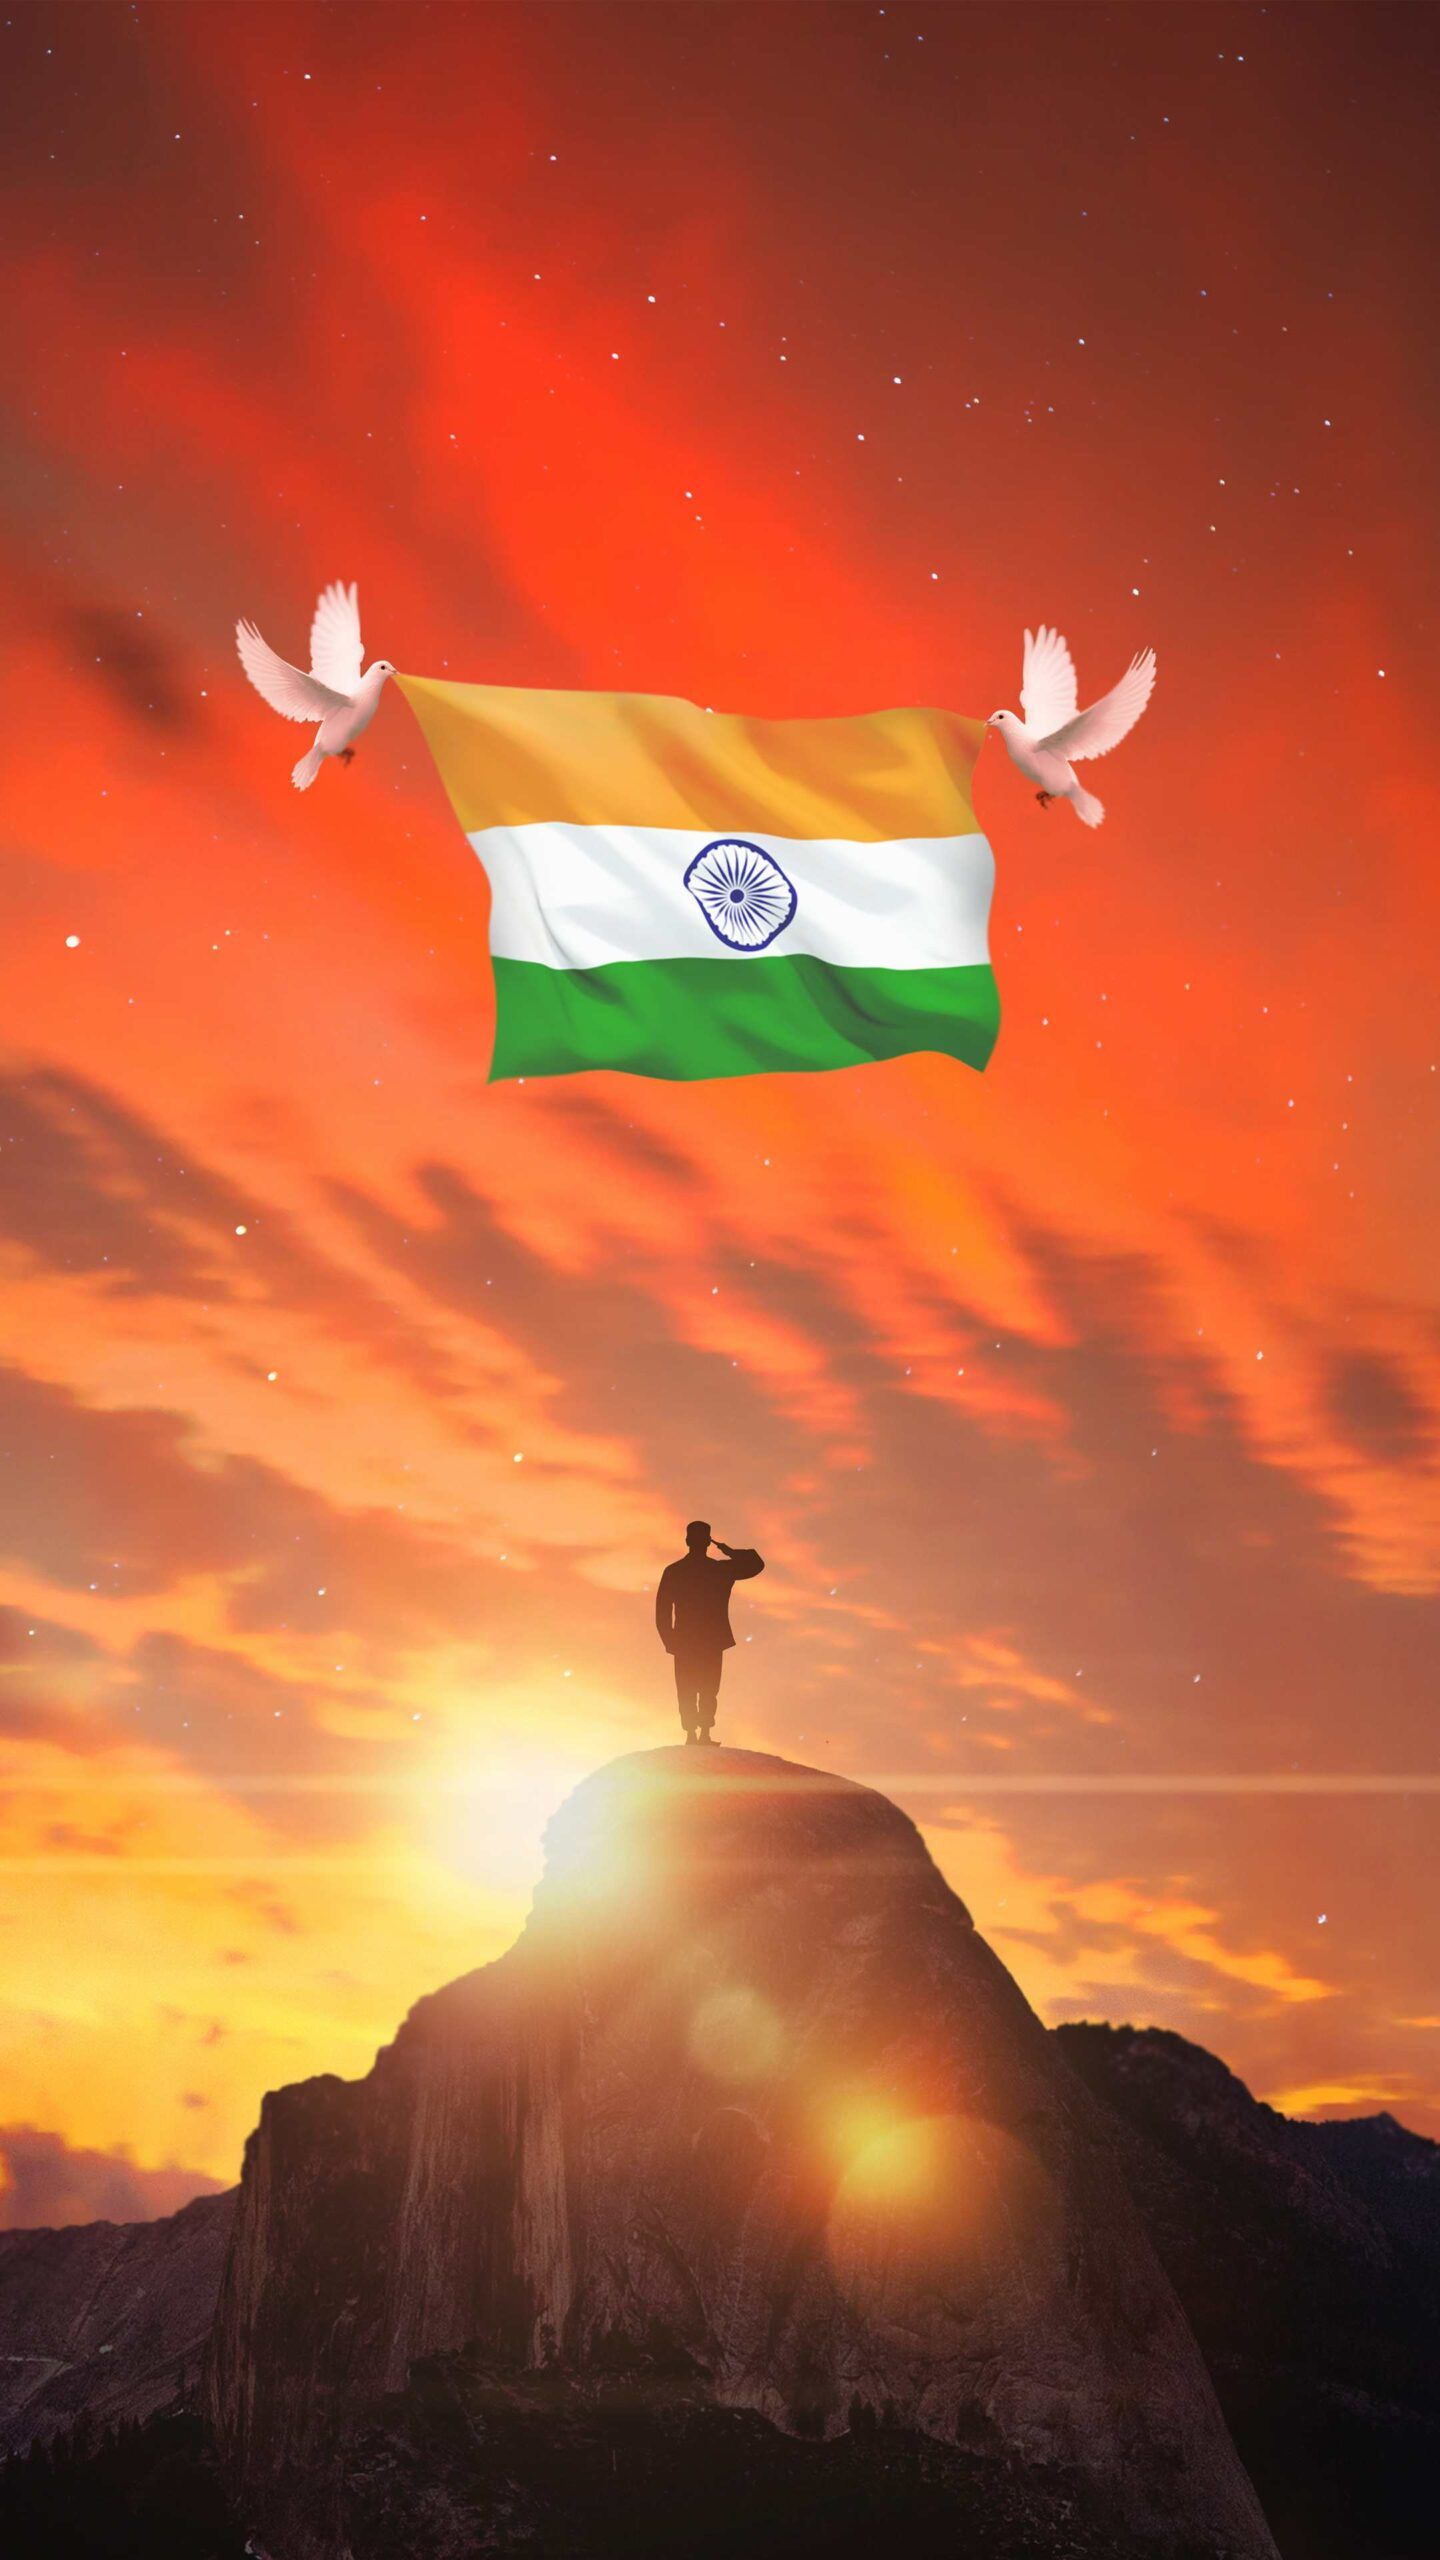 India Republic Day IPhone Wallpaper. Live wallpaper